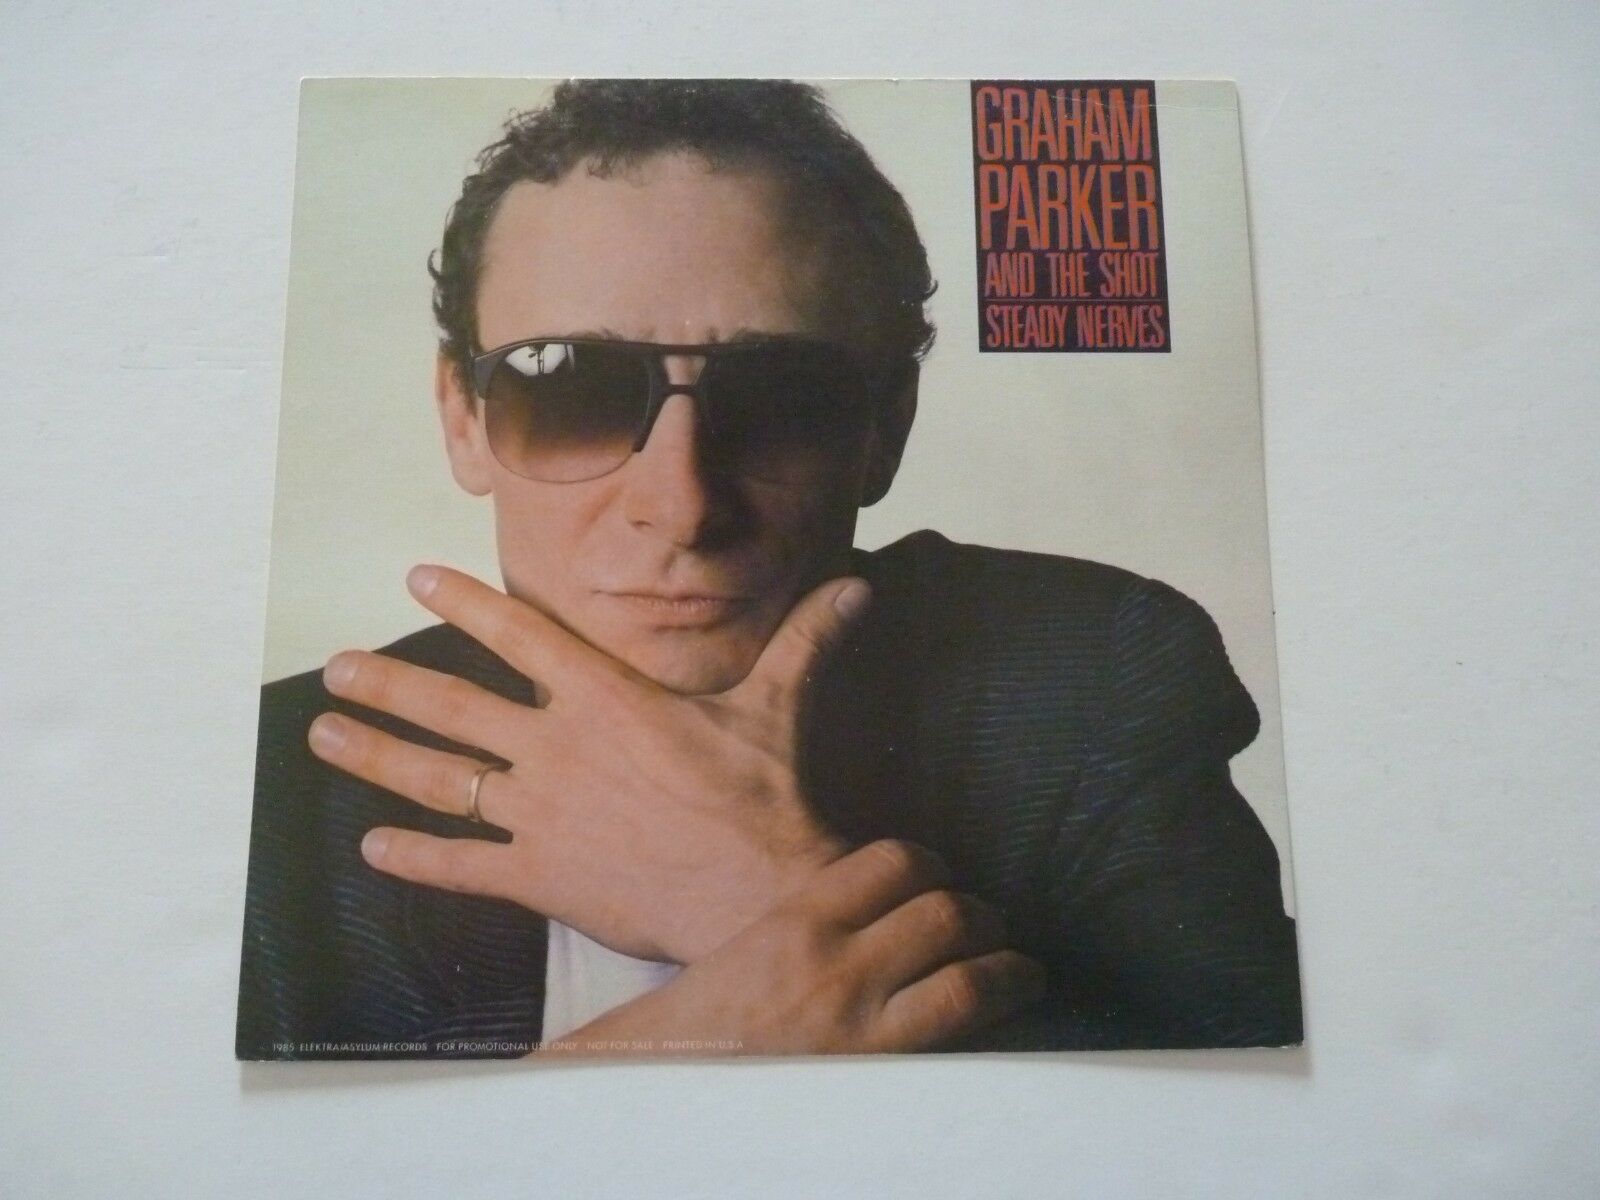 GRAHAM PARKER SHOT STEADY NERVES 1985 LP RECORD PHOTO FLAT 12×12 POSTER COLLECTIBLE MEMORABILIA